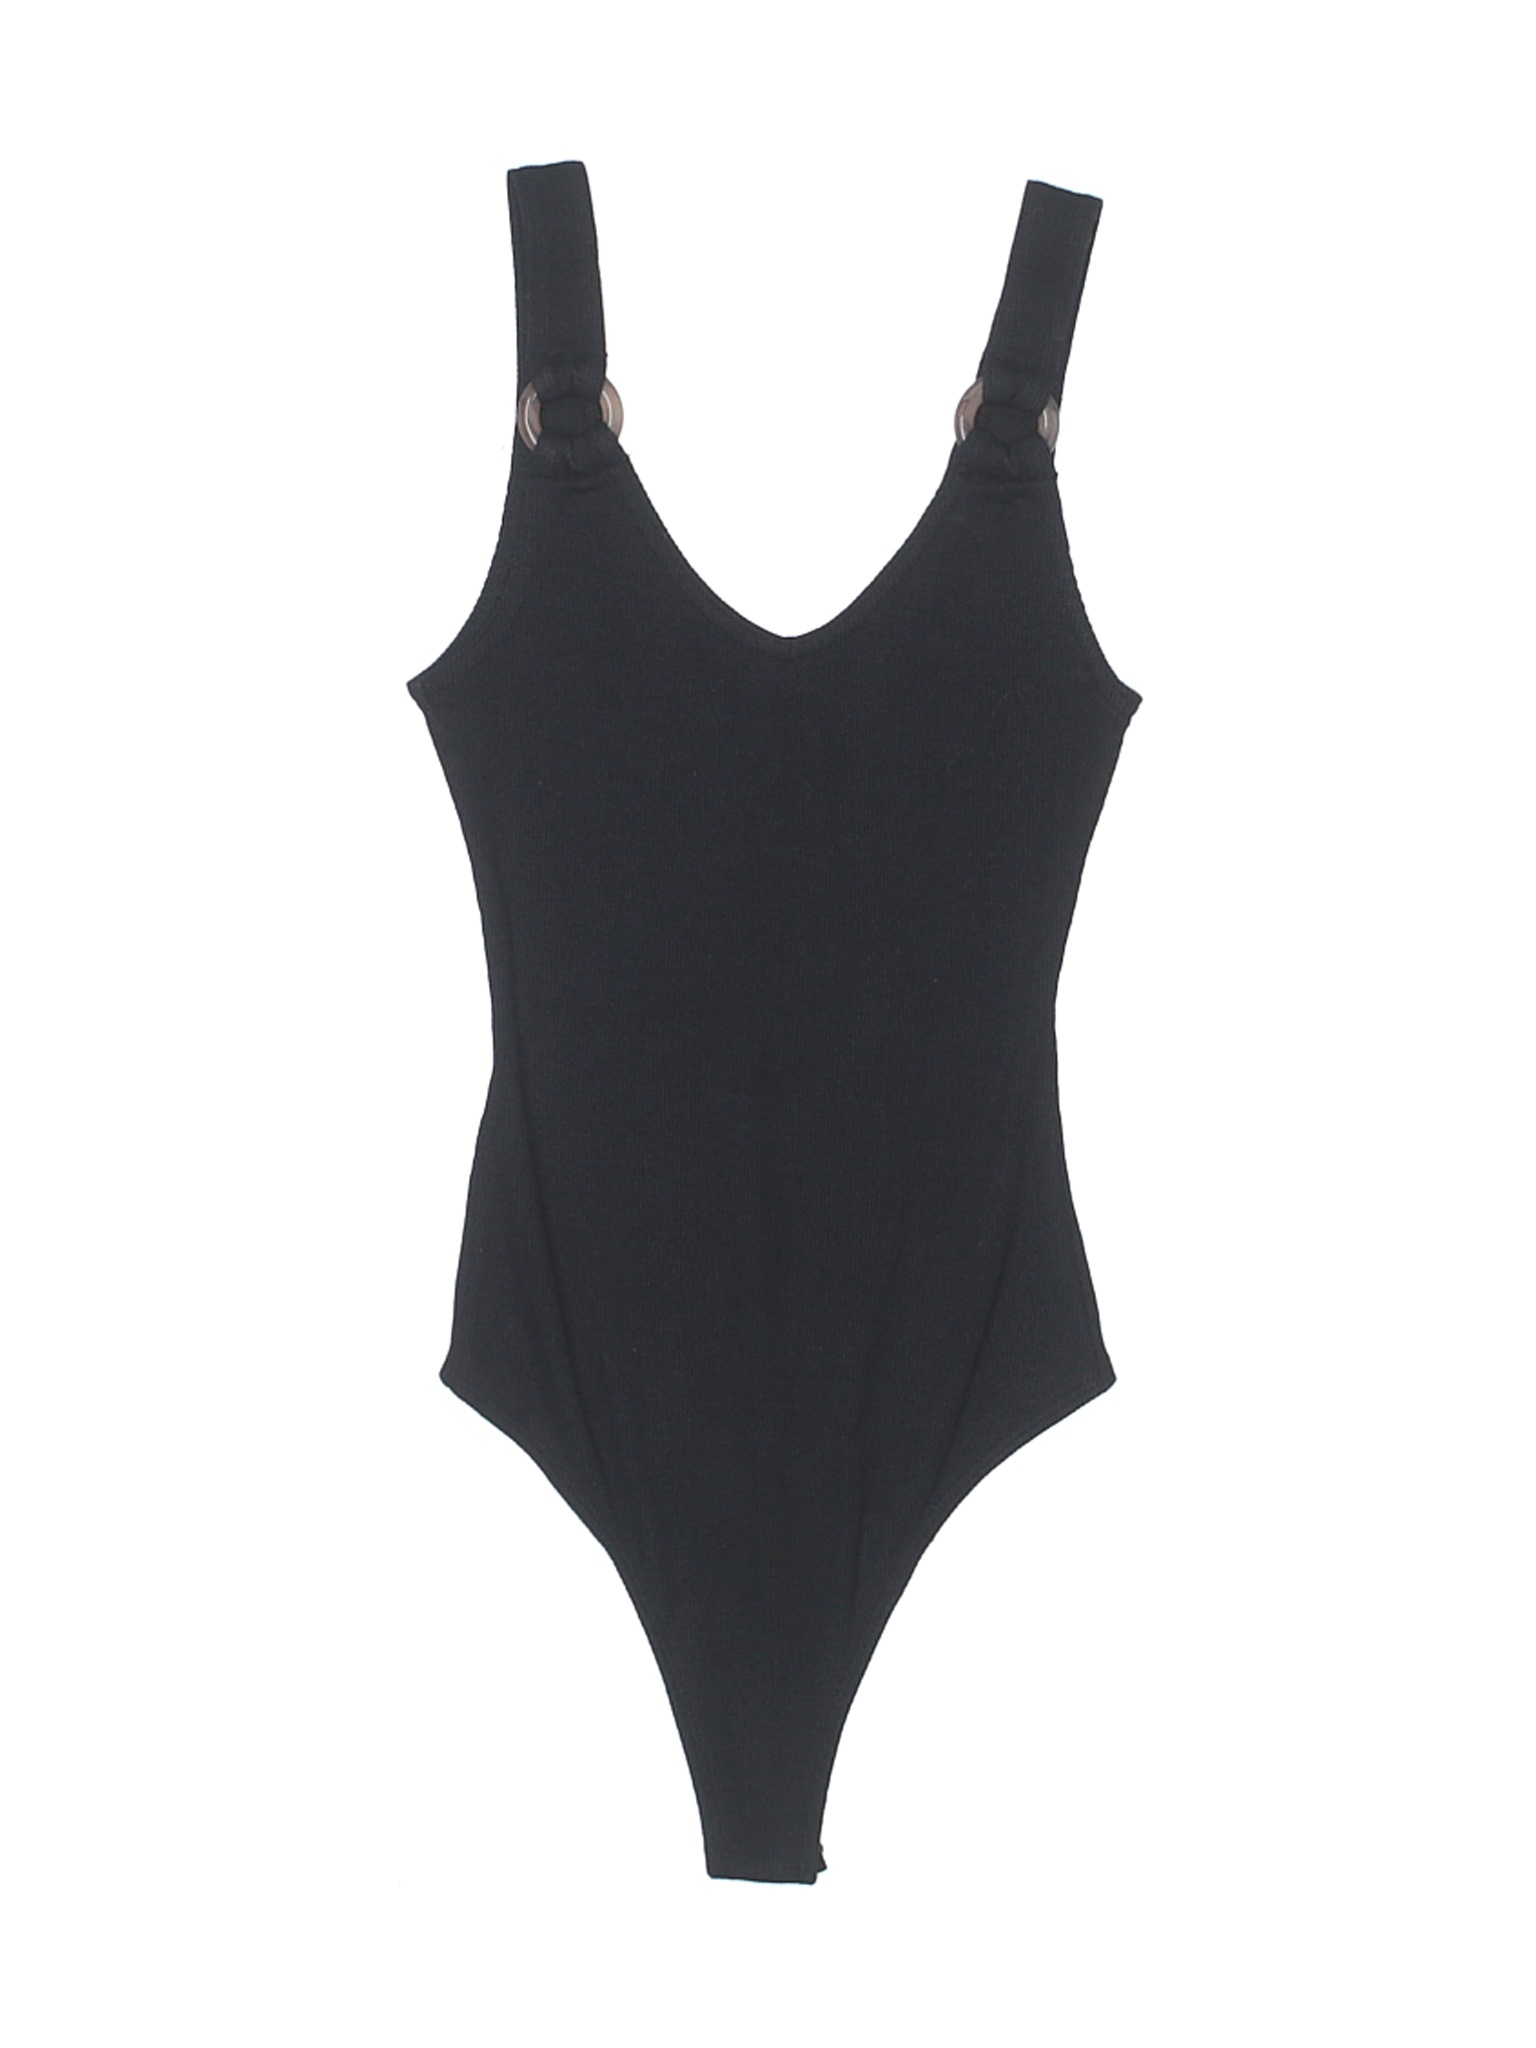 Abercrombie & Fitch Women Black Bodysuit XS | eBay